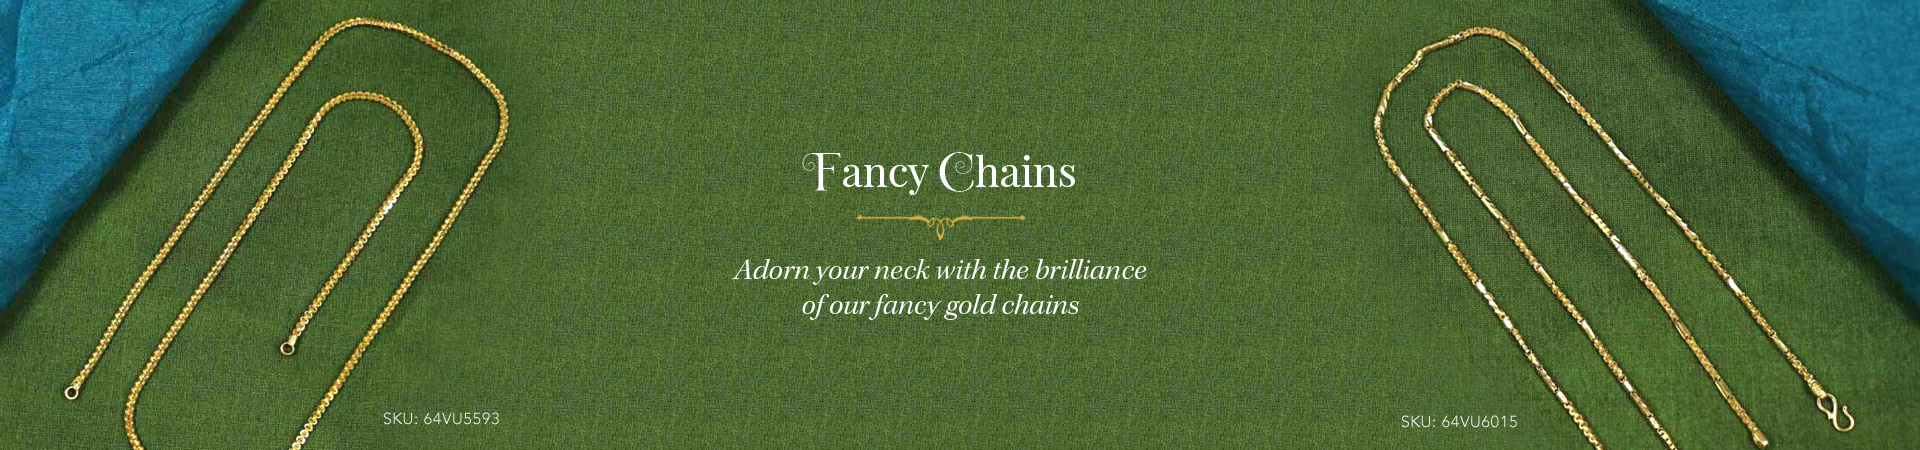 Fancy Chains